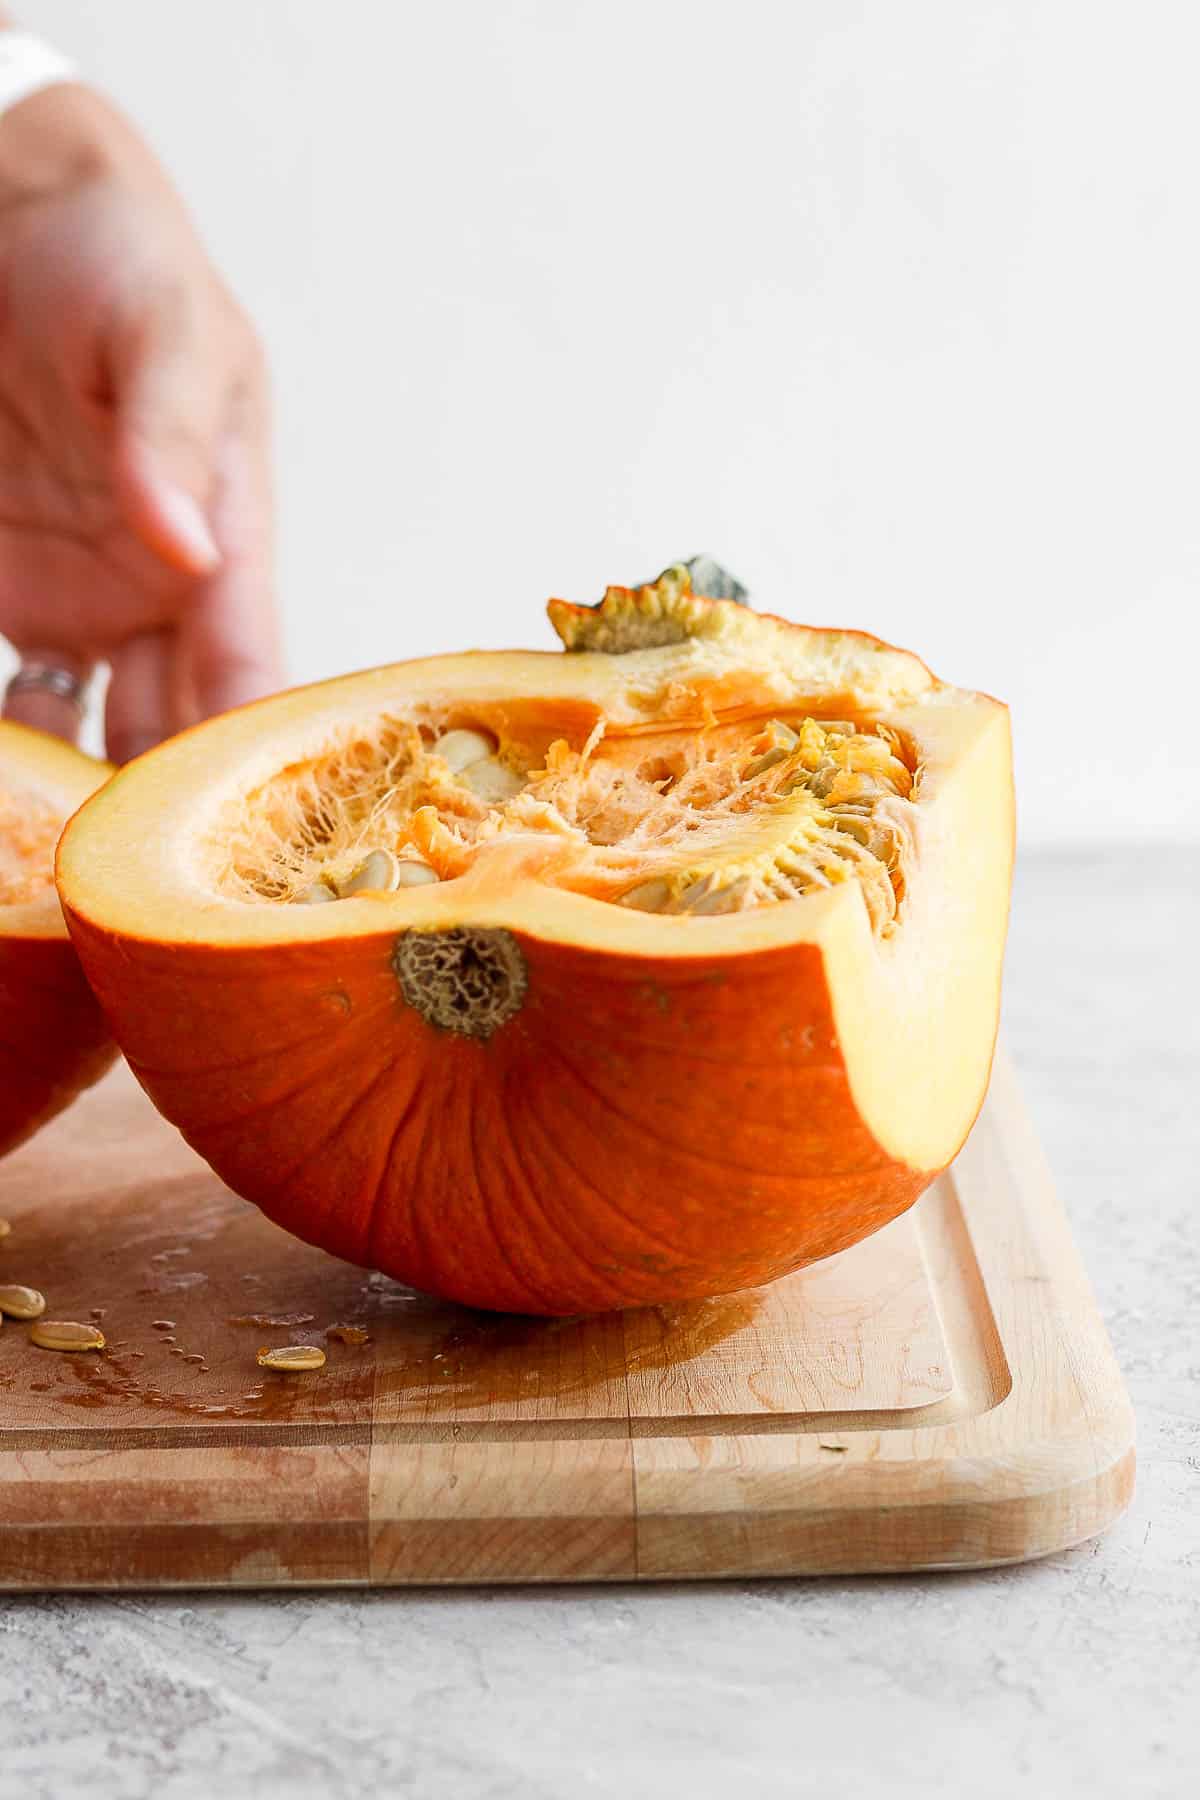 Half of a small, baking pumpkin on a cutting board.